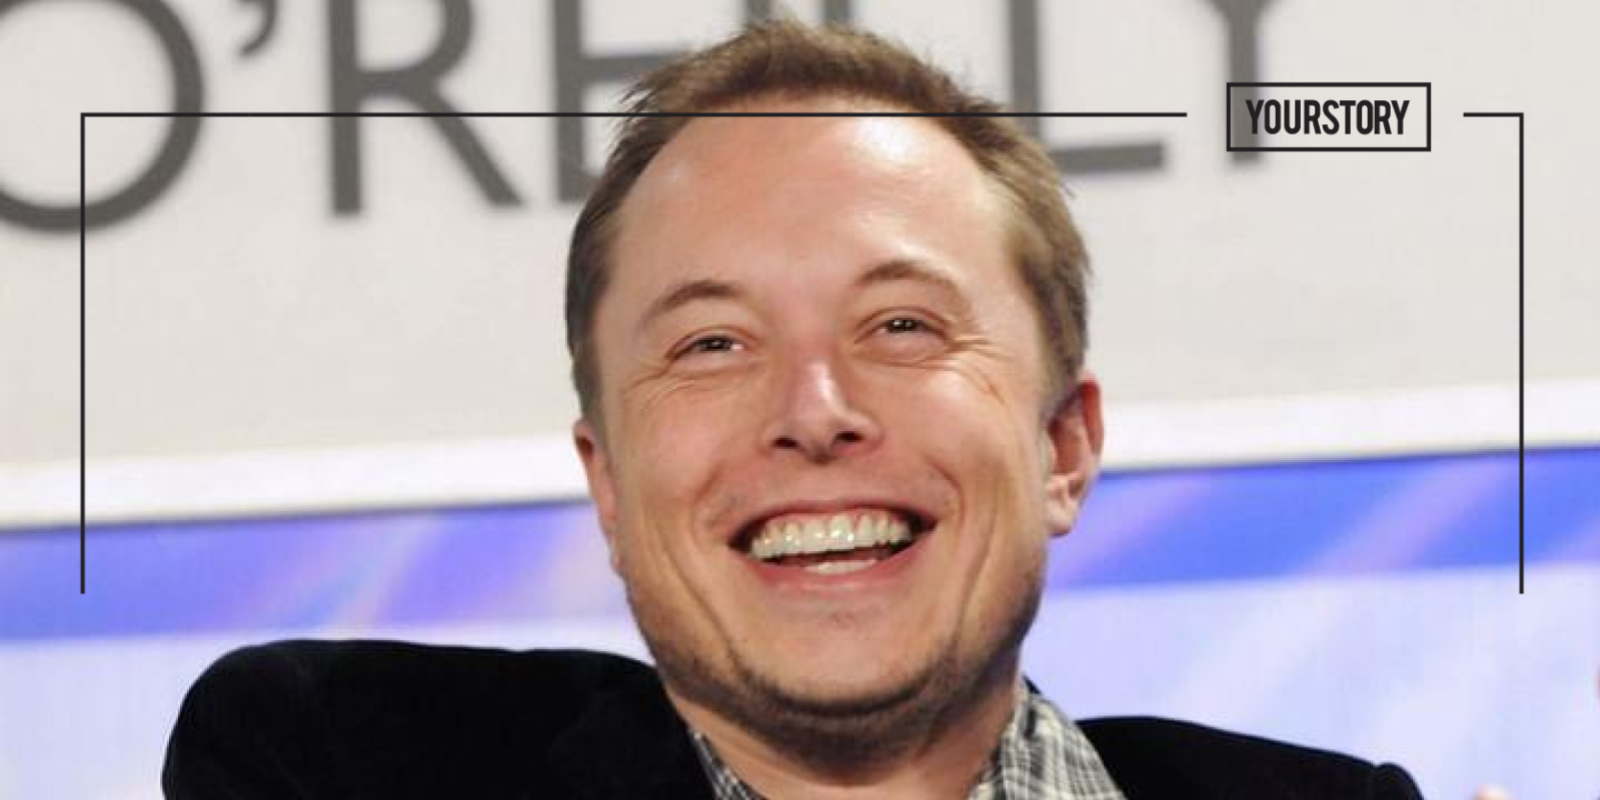 Elon Musk, musician Grimes welcomed daughter Exa Dark Sideræl Musk or 'Y' in December 